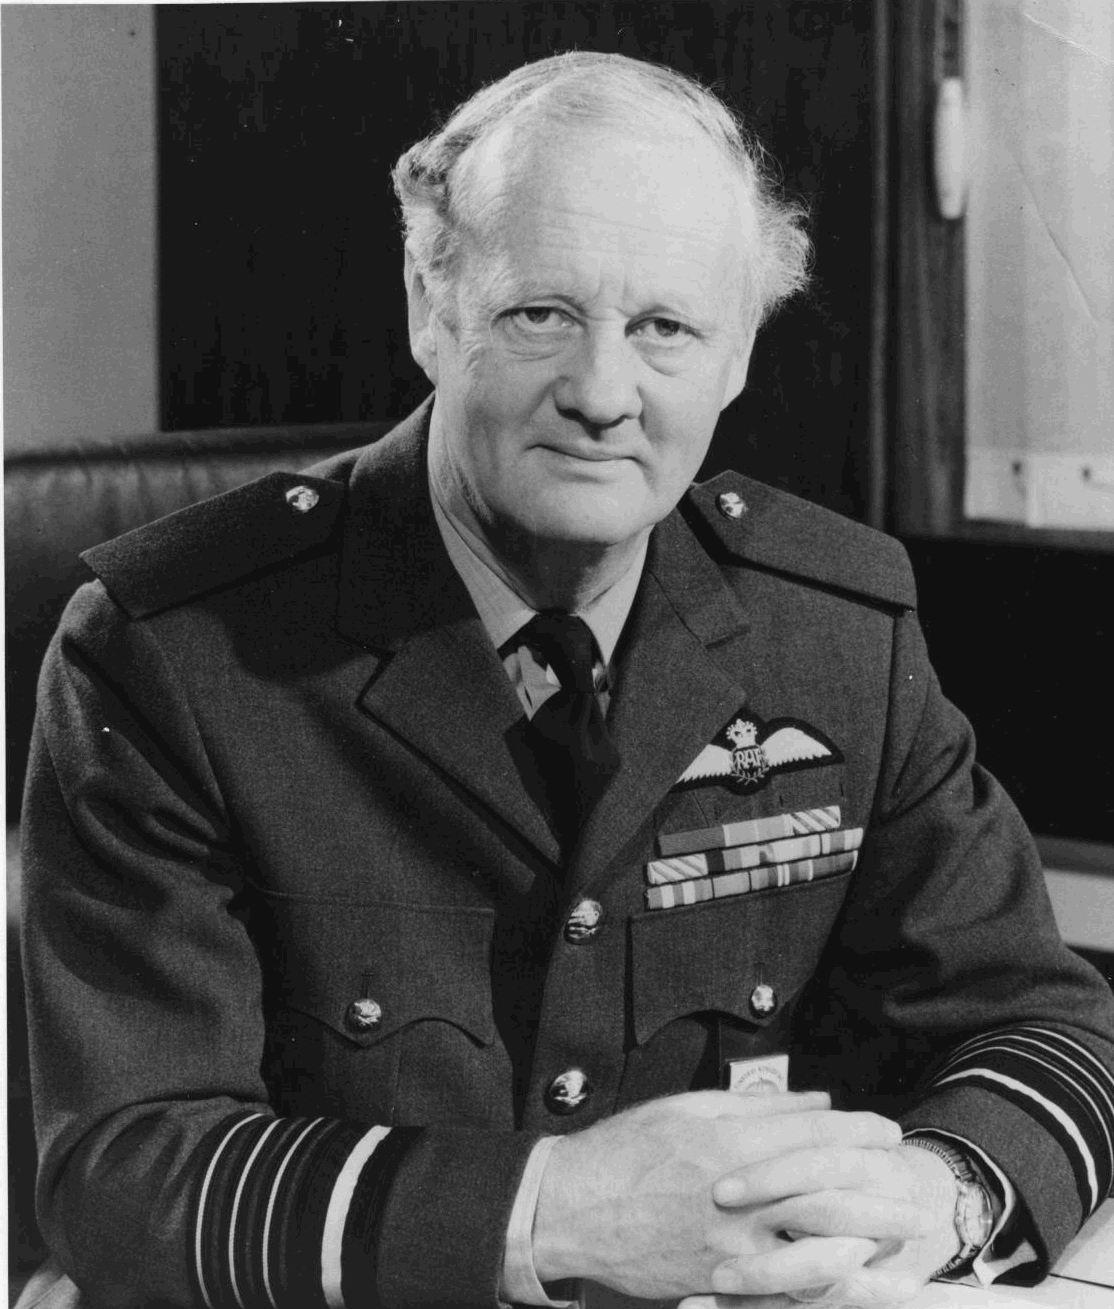 Air Chief Marshal Sir Nigel Maynard